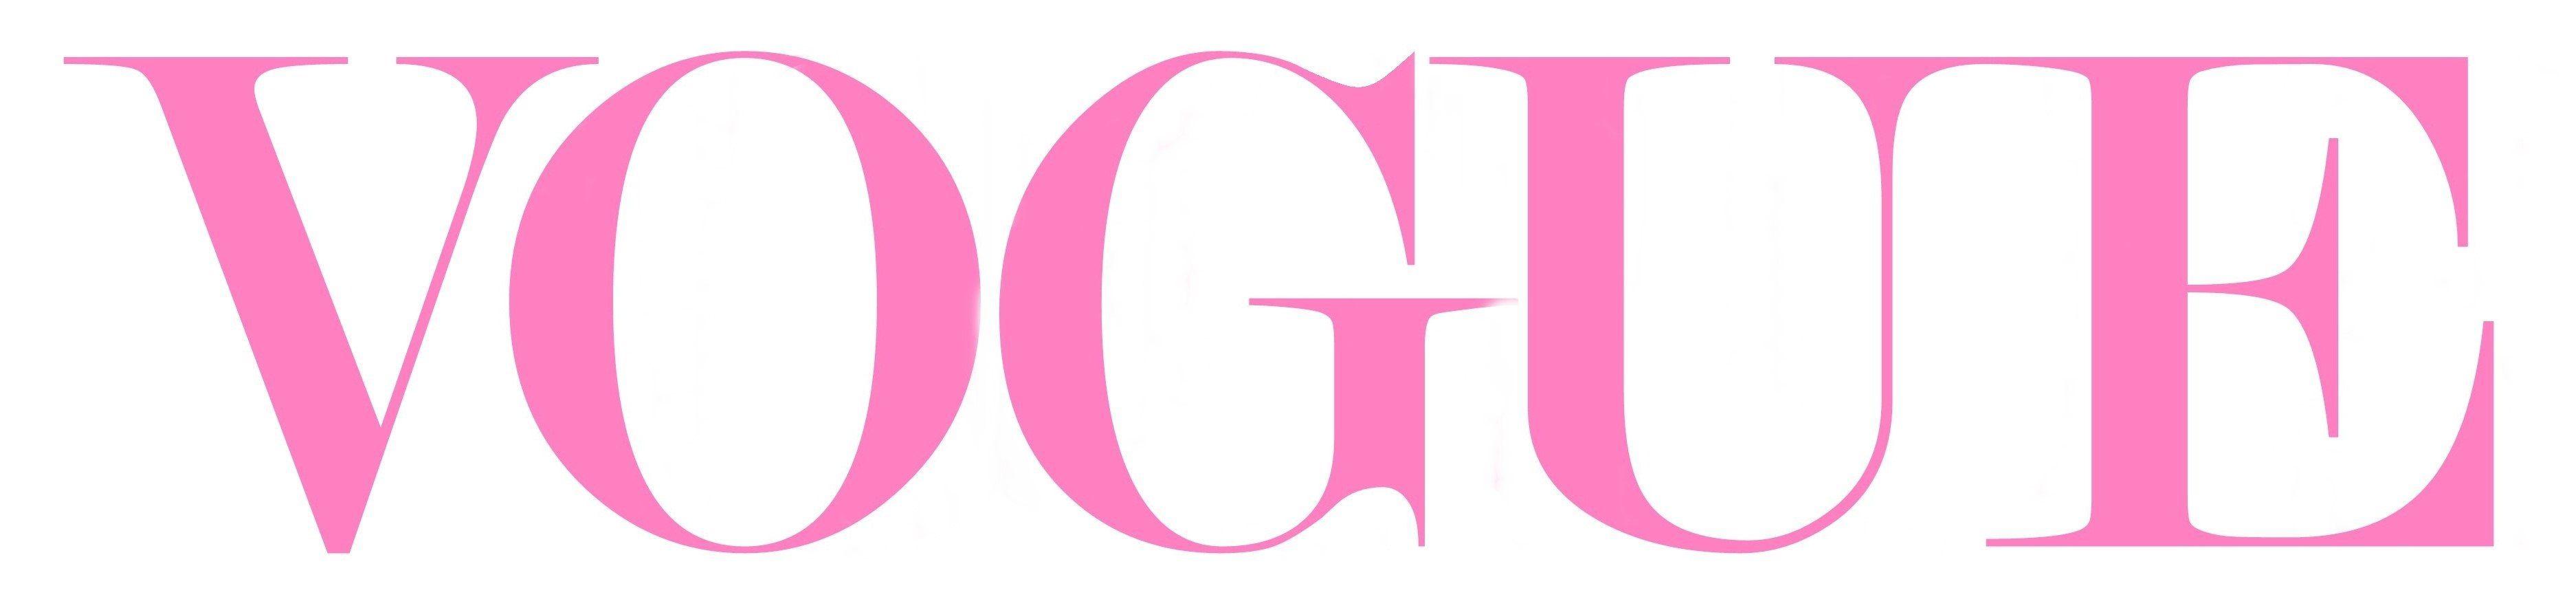 Vogue Logo - Vogue logo VirtueBrush